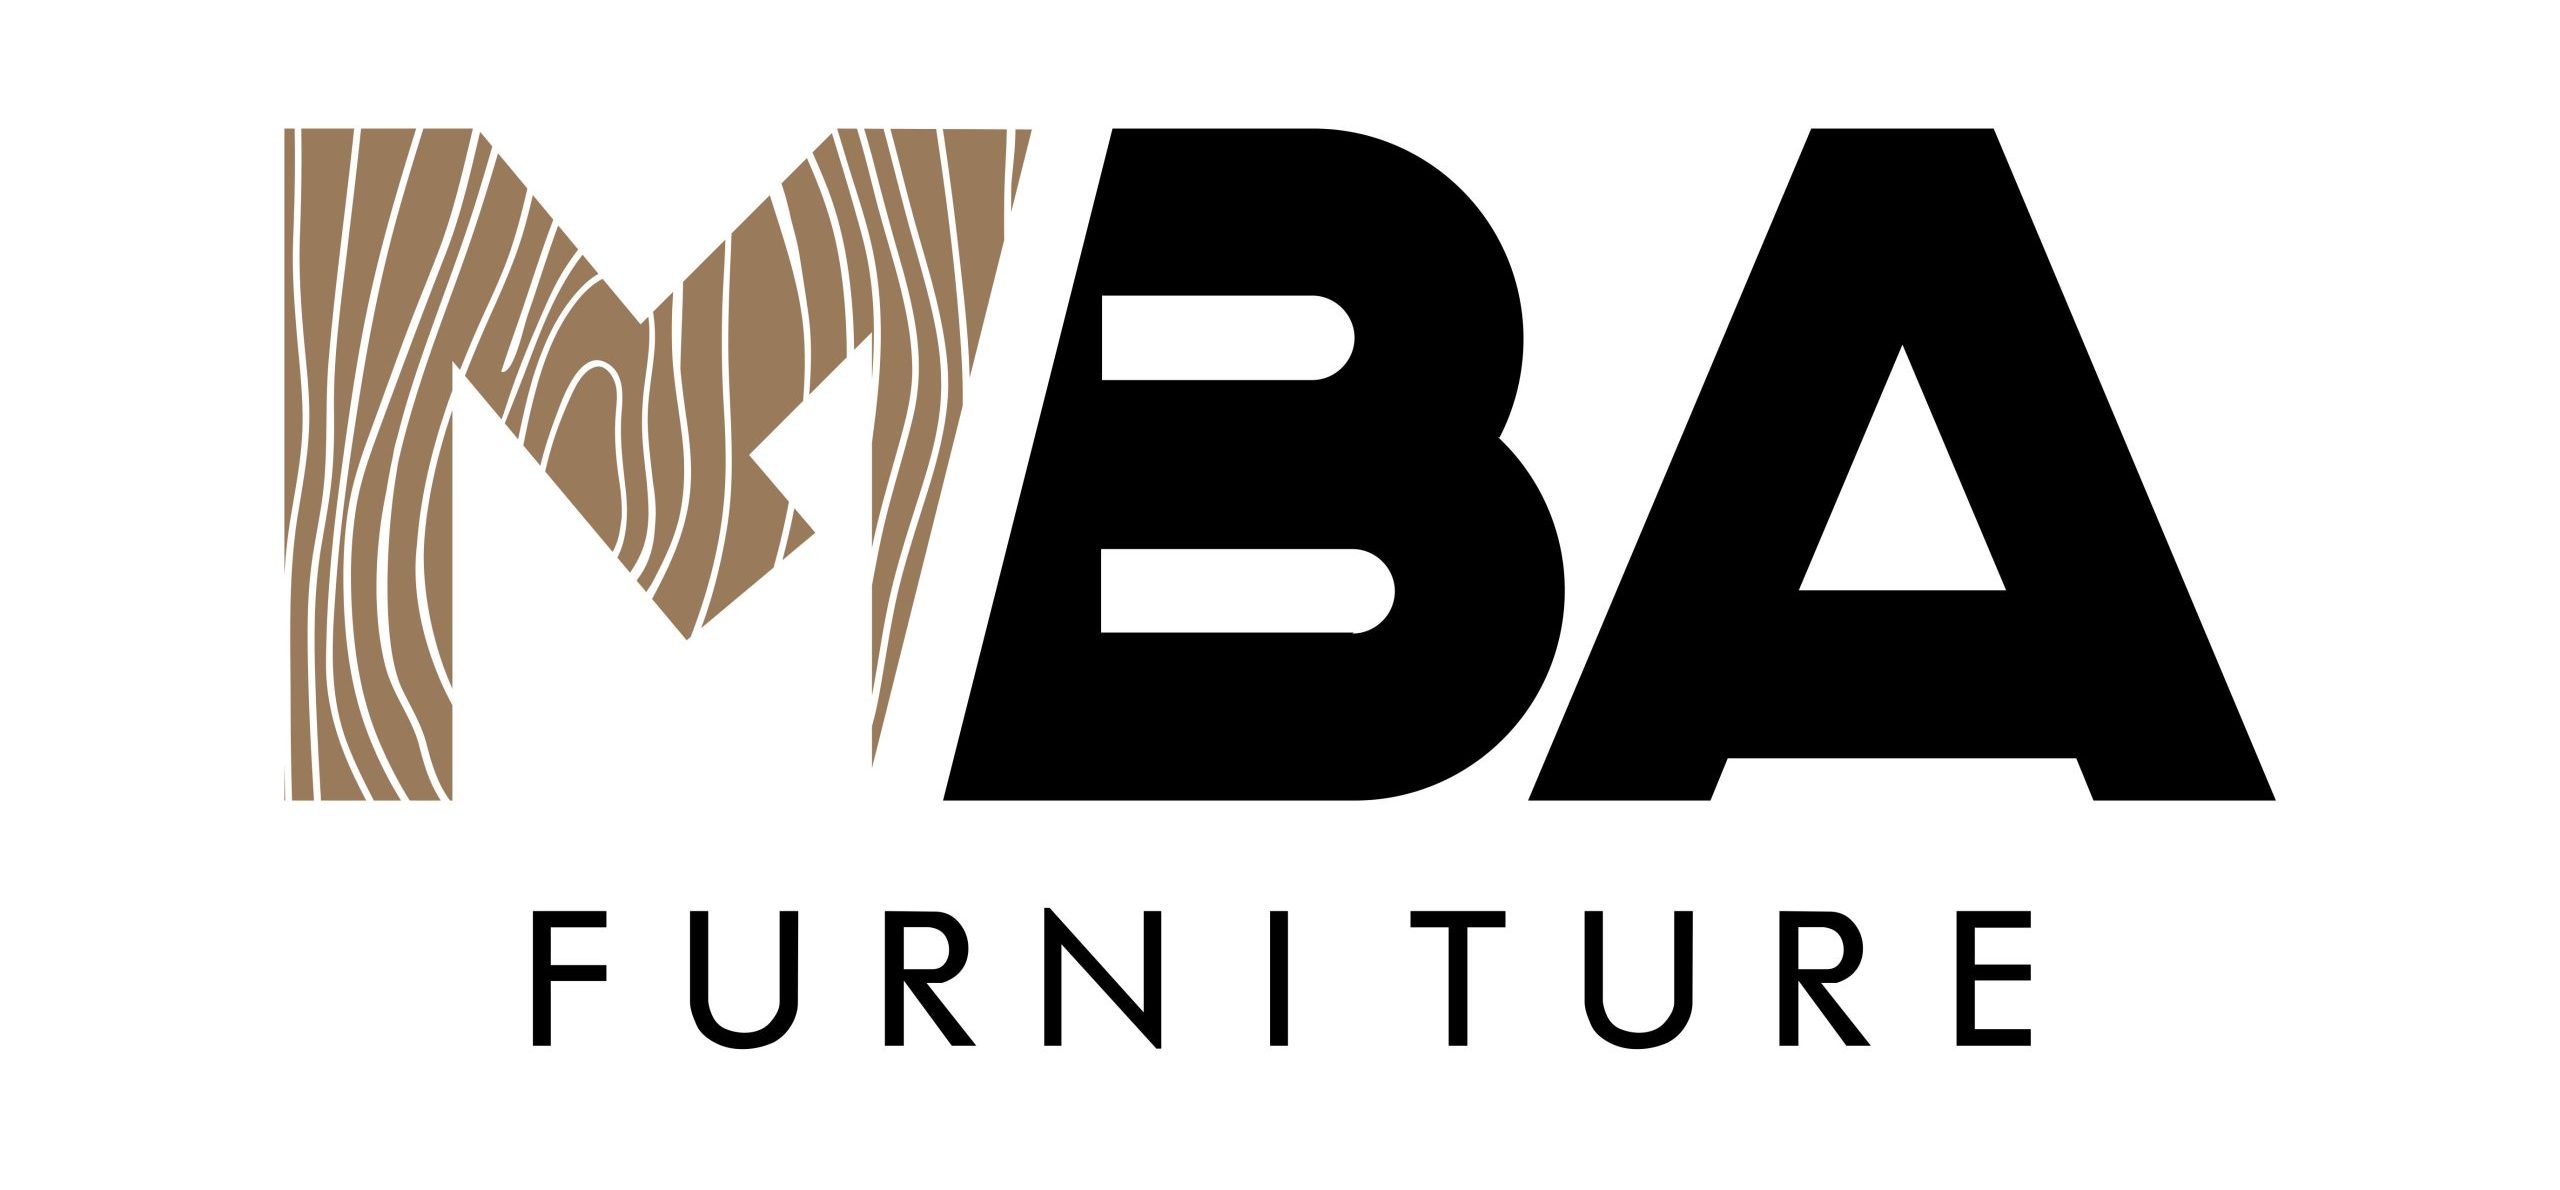 MBA Furniture Studio Charisma Pagrindinis